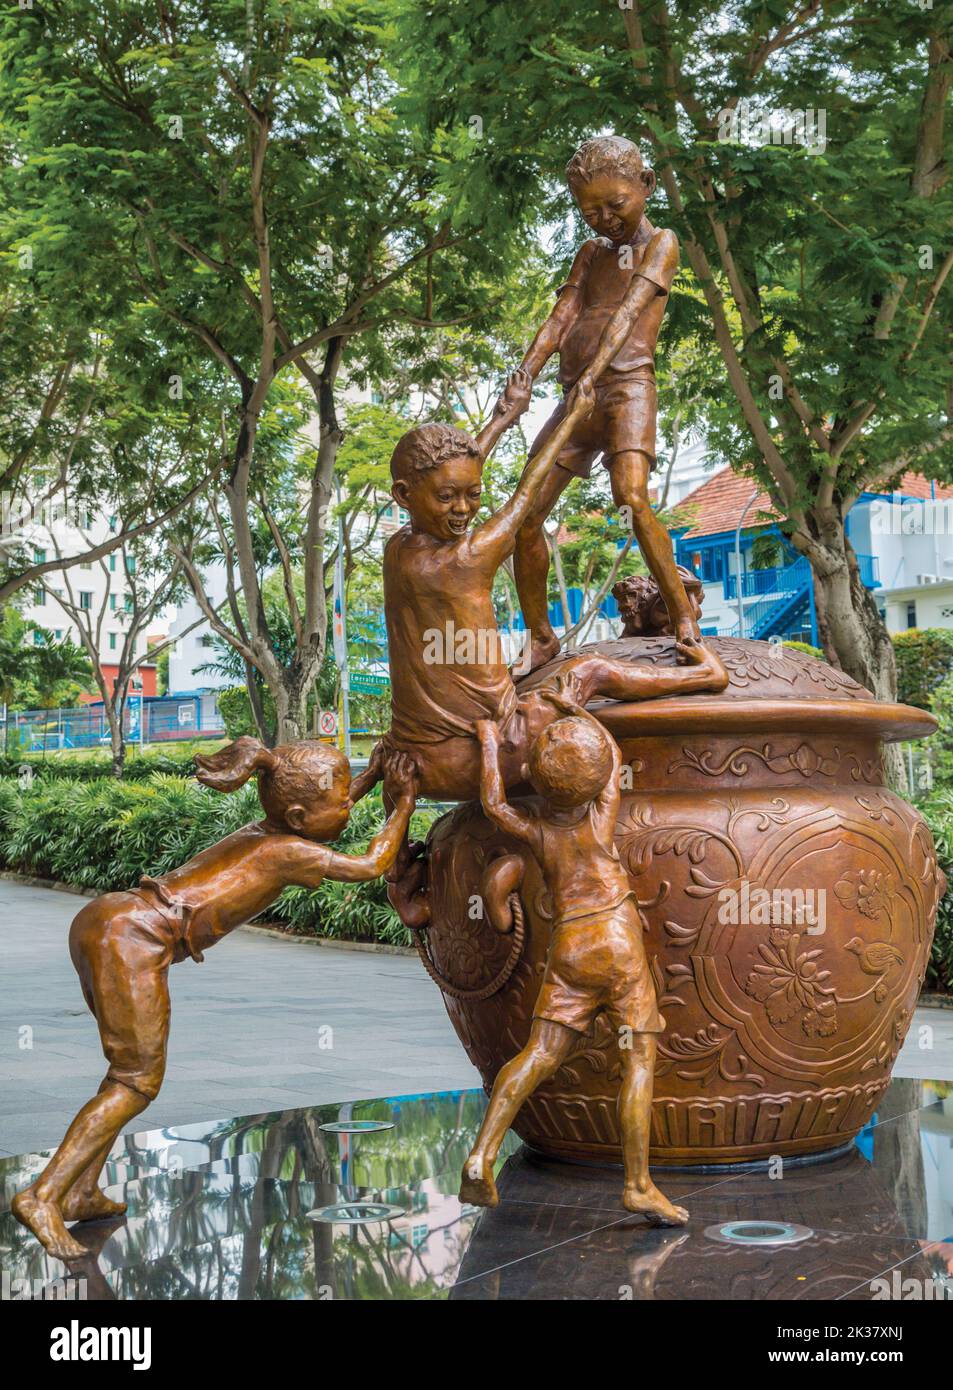 Budak-Budak, or Children. Pioneering the Next Generation.  A bronze sculpture by Singaporean artist Chong Fah Cheong, born 1946. Republic of Singapore Stock Photo